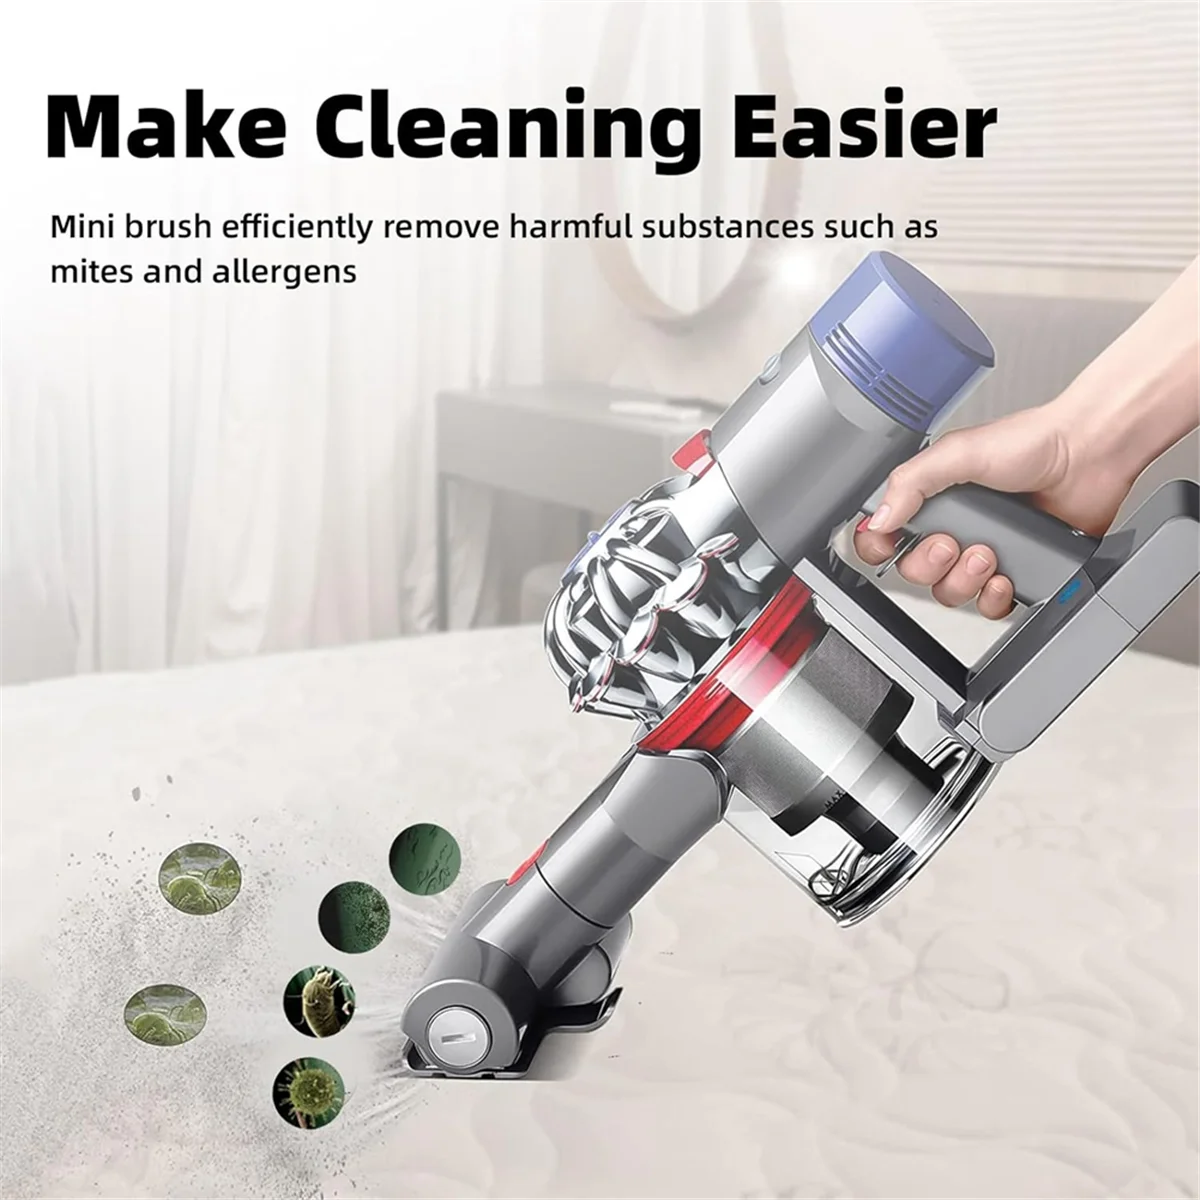 Mini Turbo Brush Head for Dyson Cordless Vacuums - Remove Dust, Hair, Mites